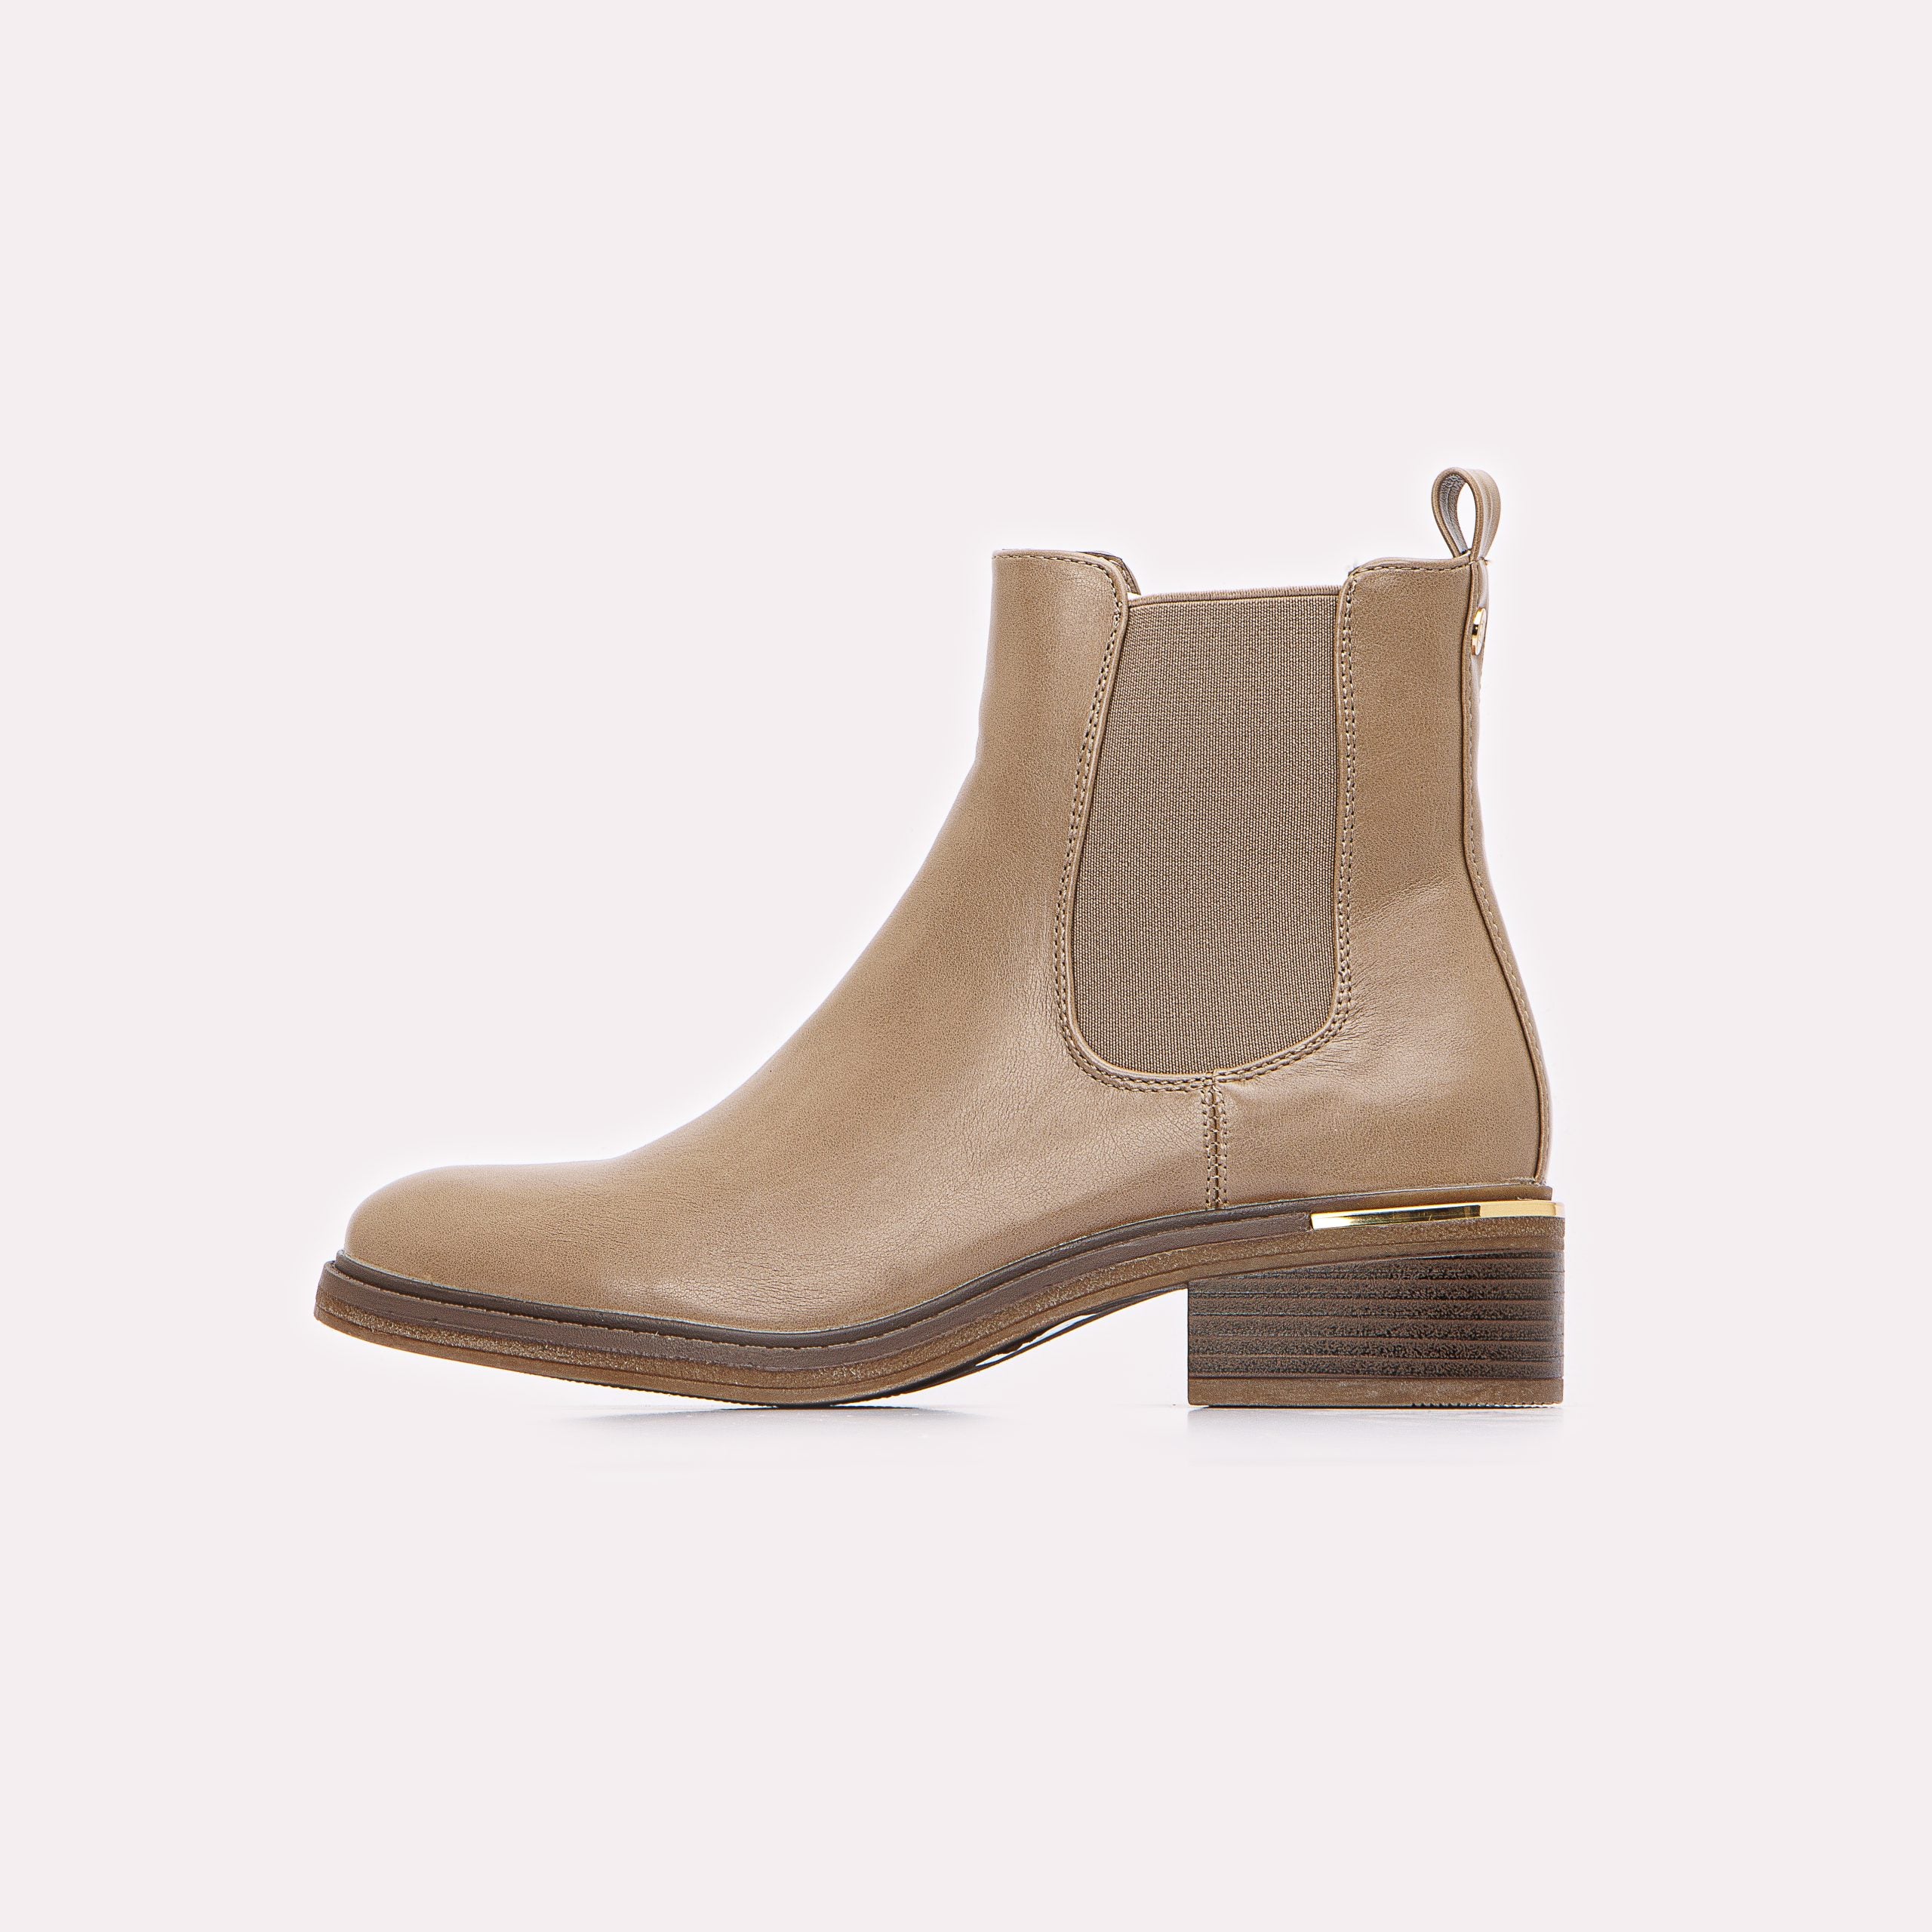 Shoeroom Half Boot Leather For Women 2938